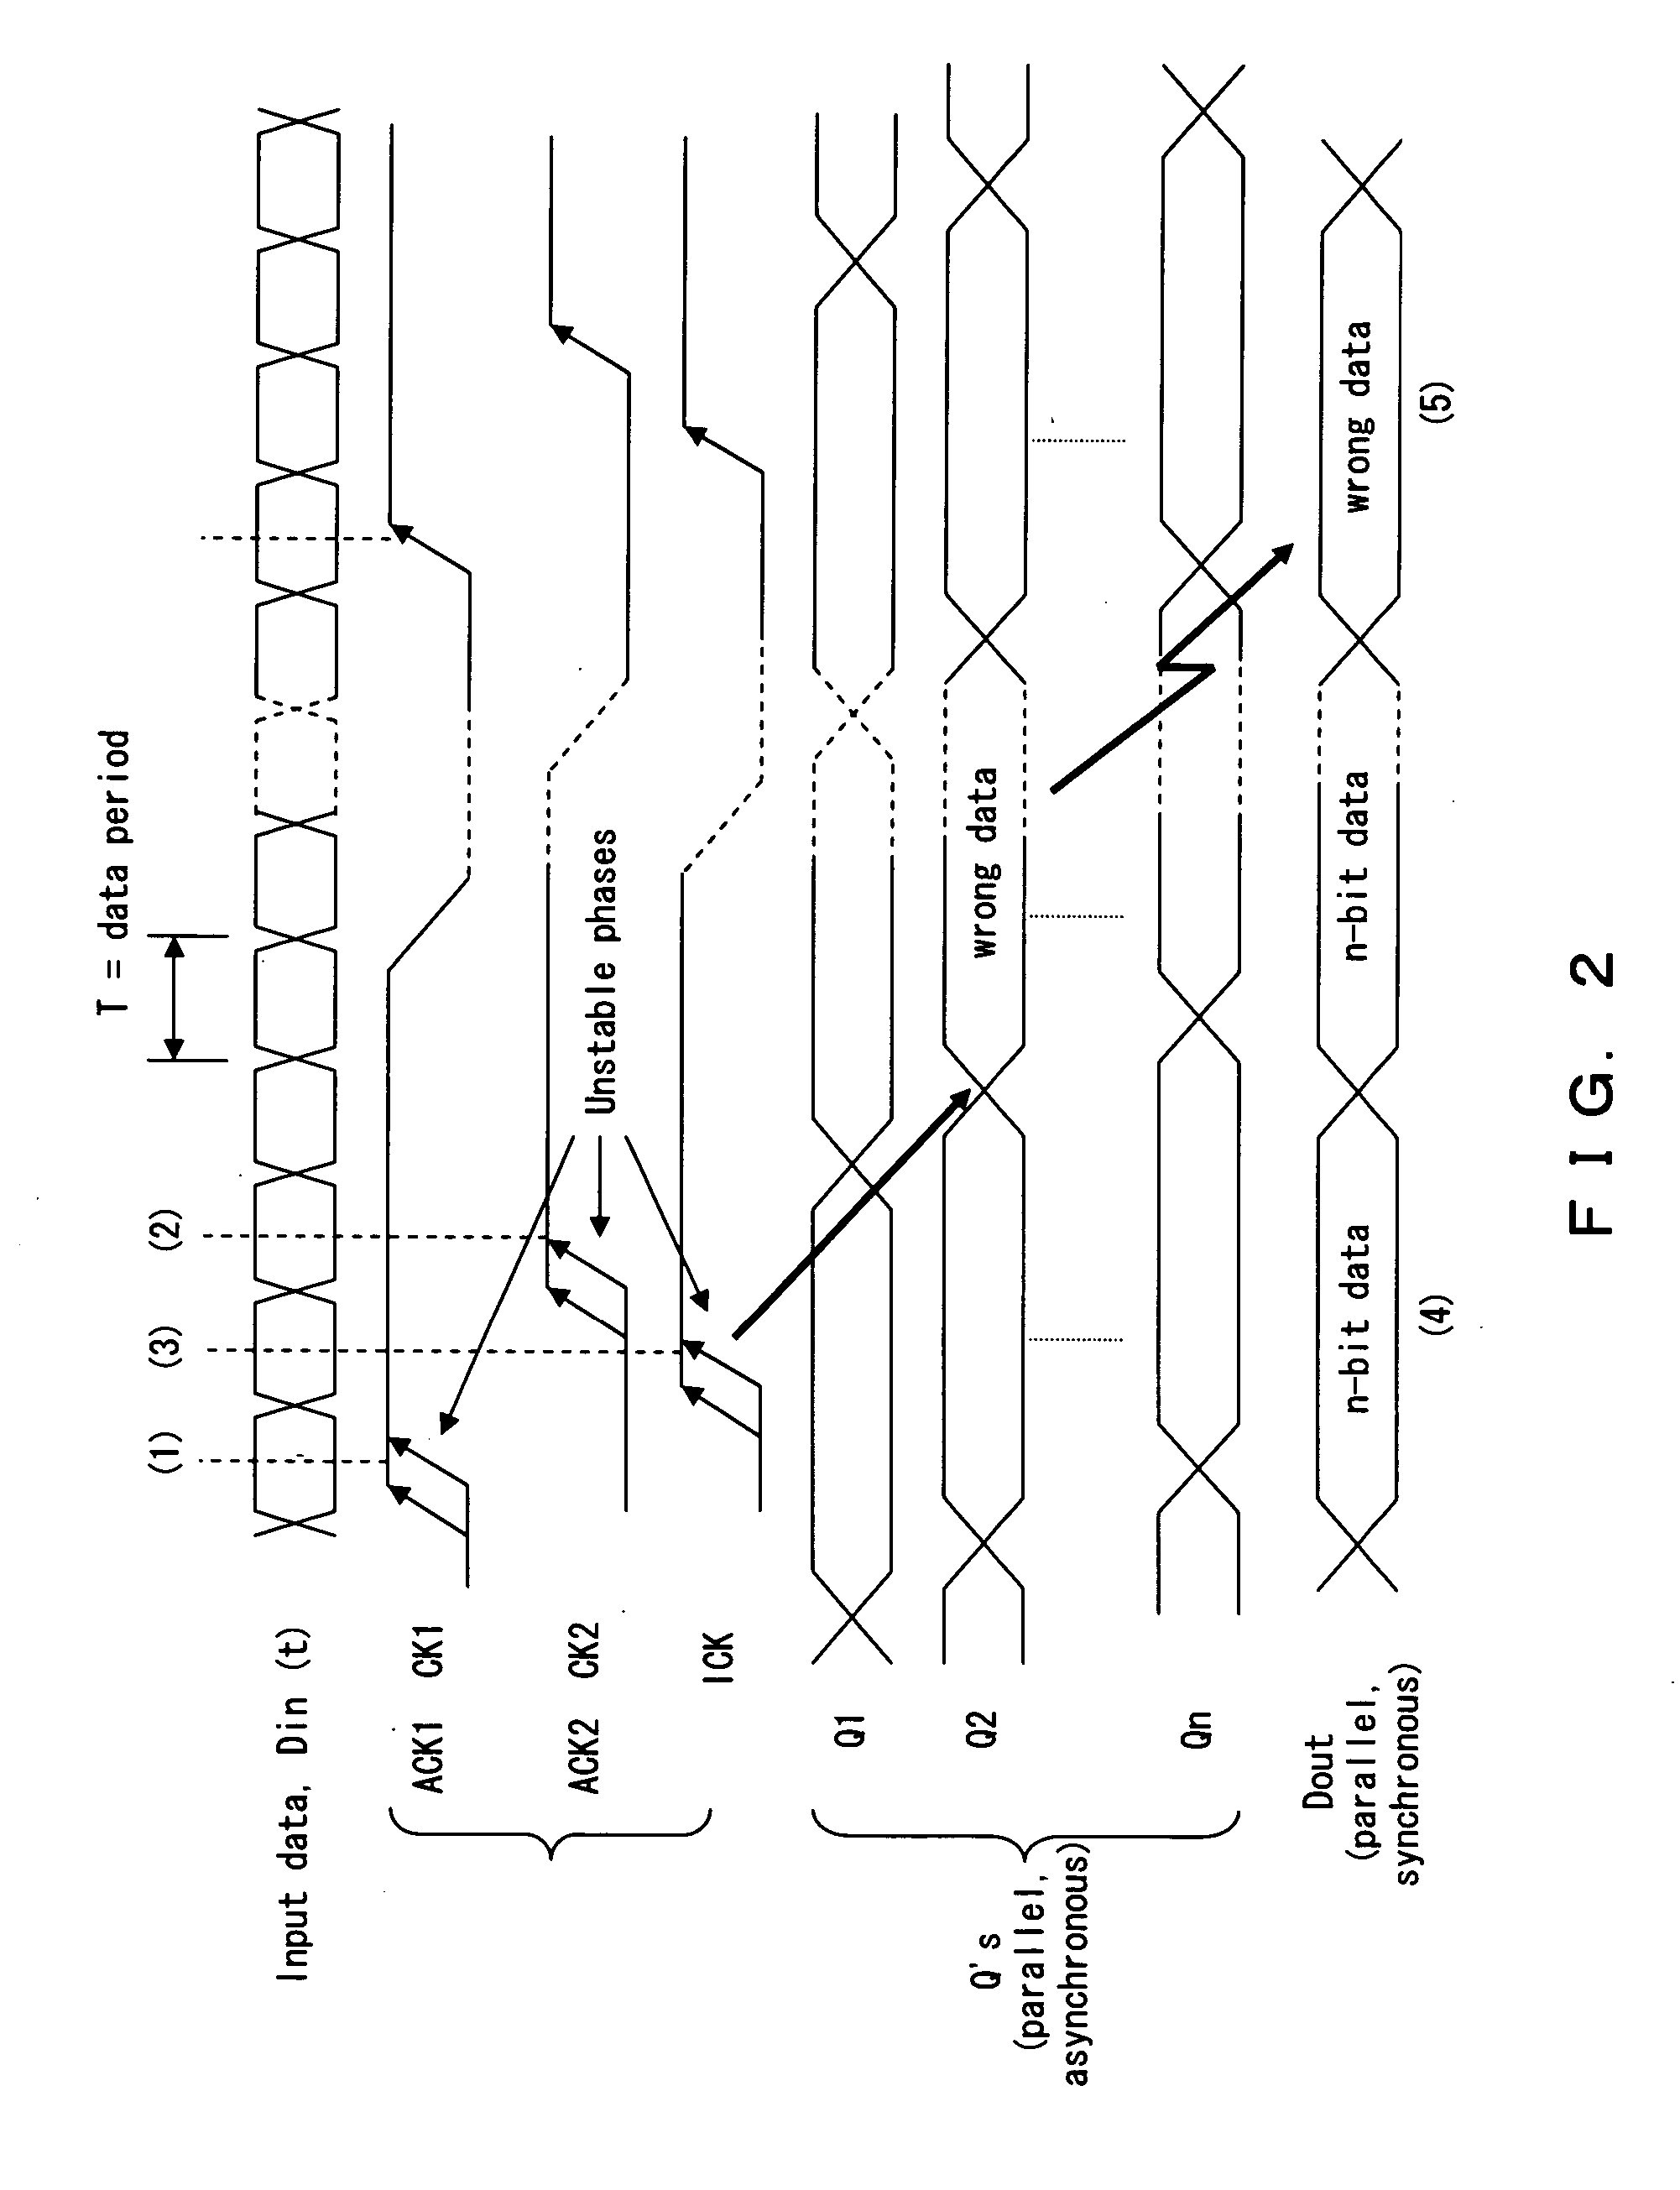 Phase interpolator with adaptive delay adjustment